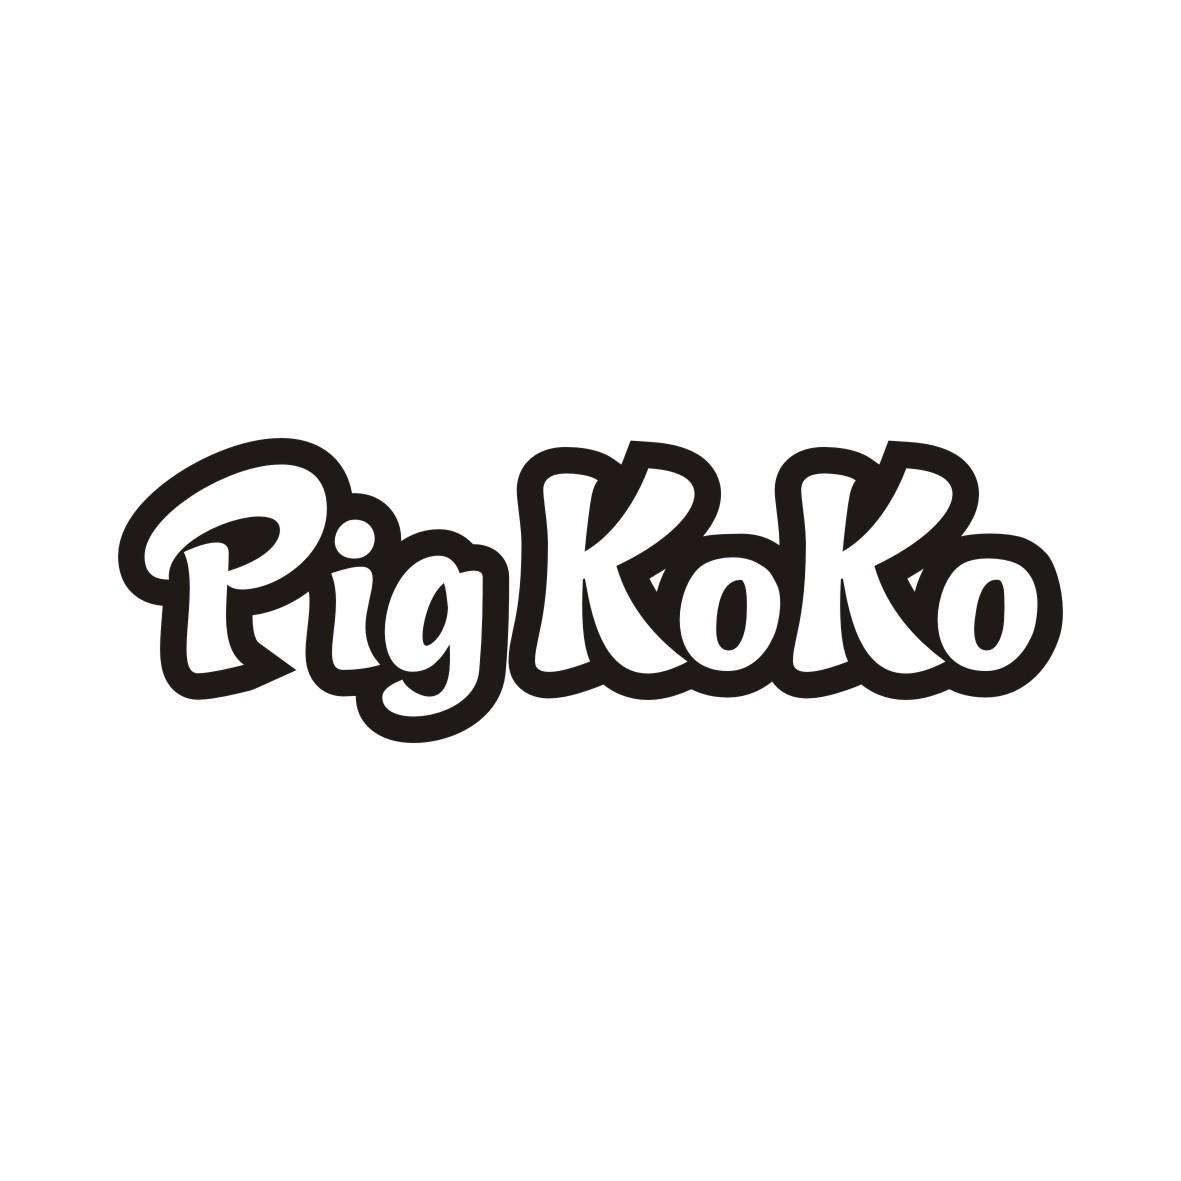 29类-食品PIGKOKO商标转让